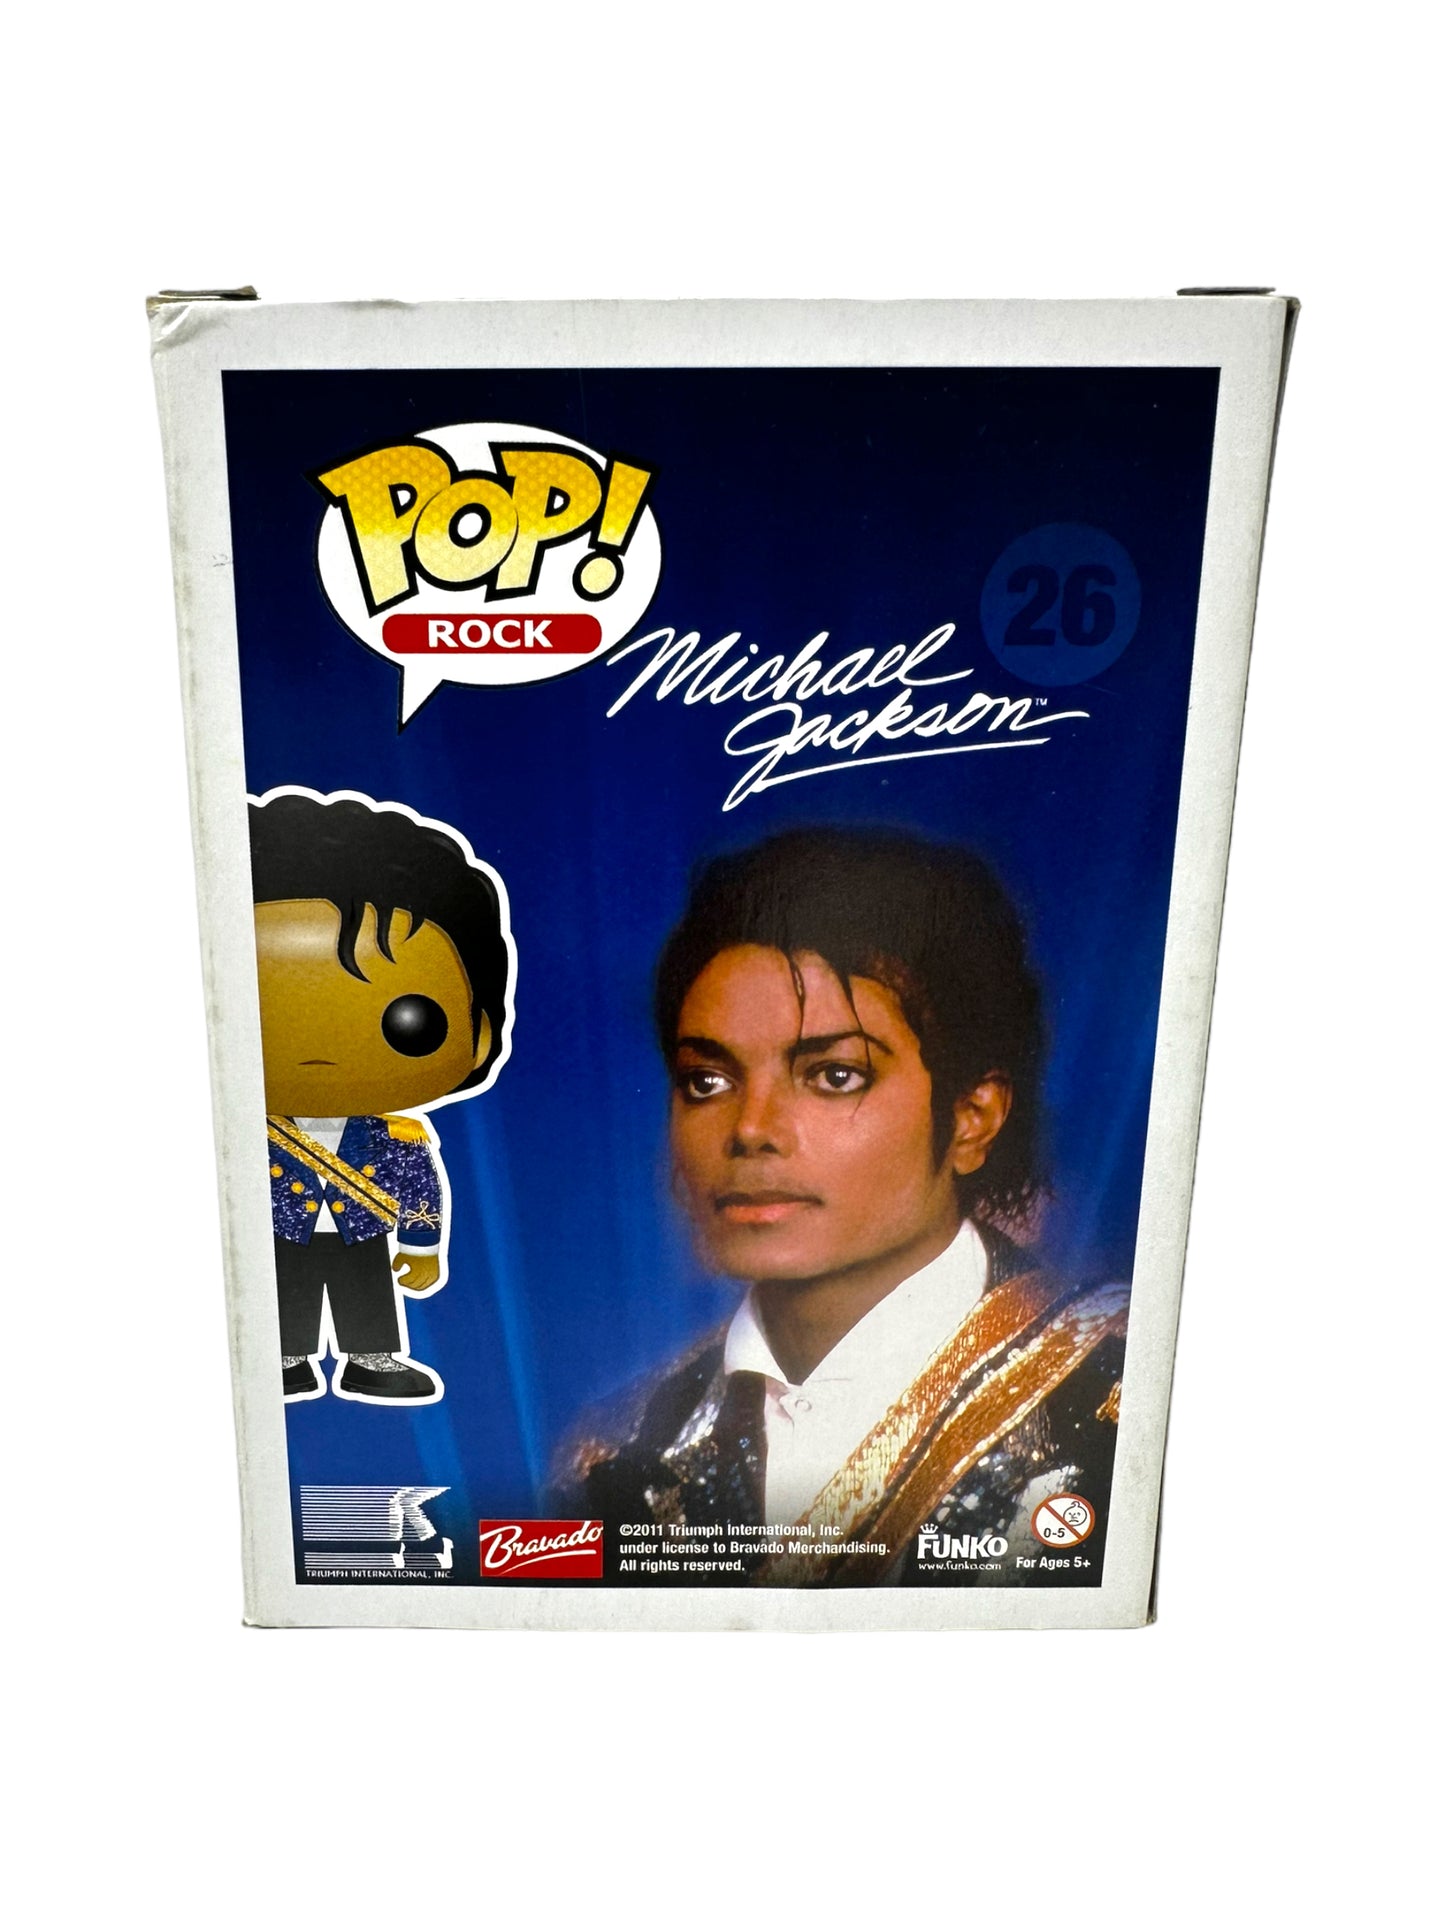 Sold 9/25 2013 Michael Jackson 26